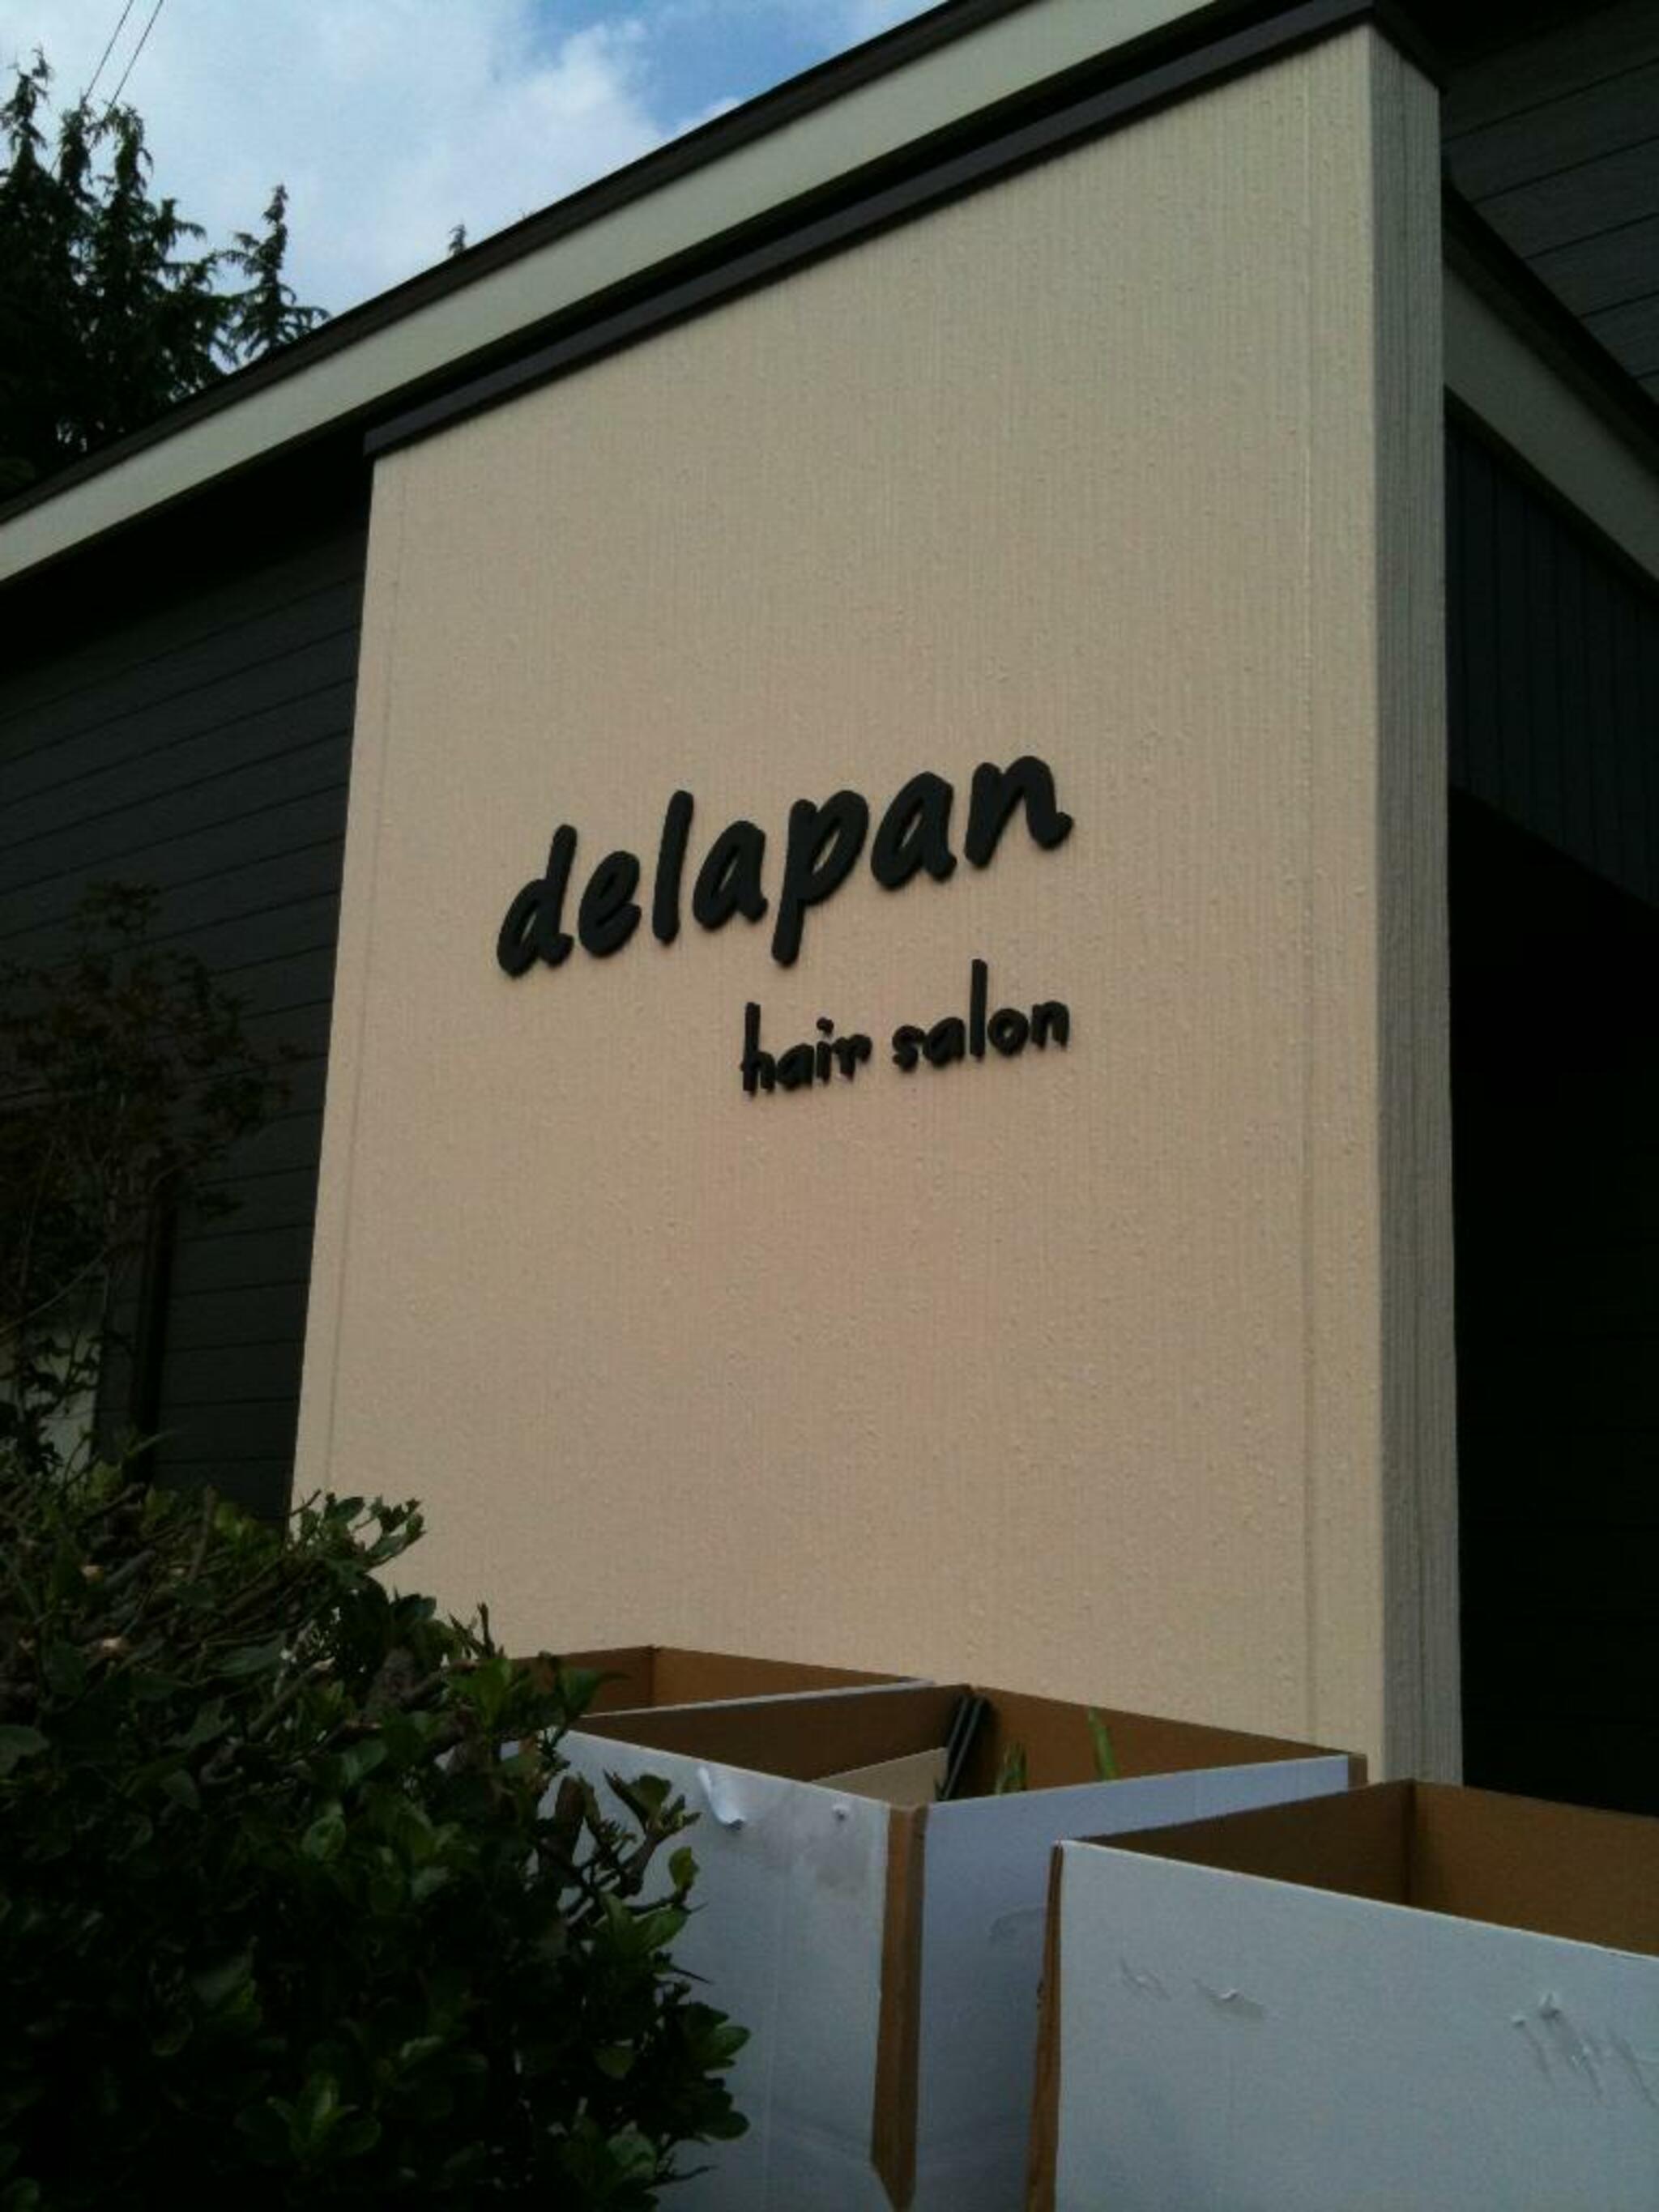 delapan hair salonの代表写真4